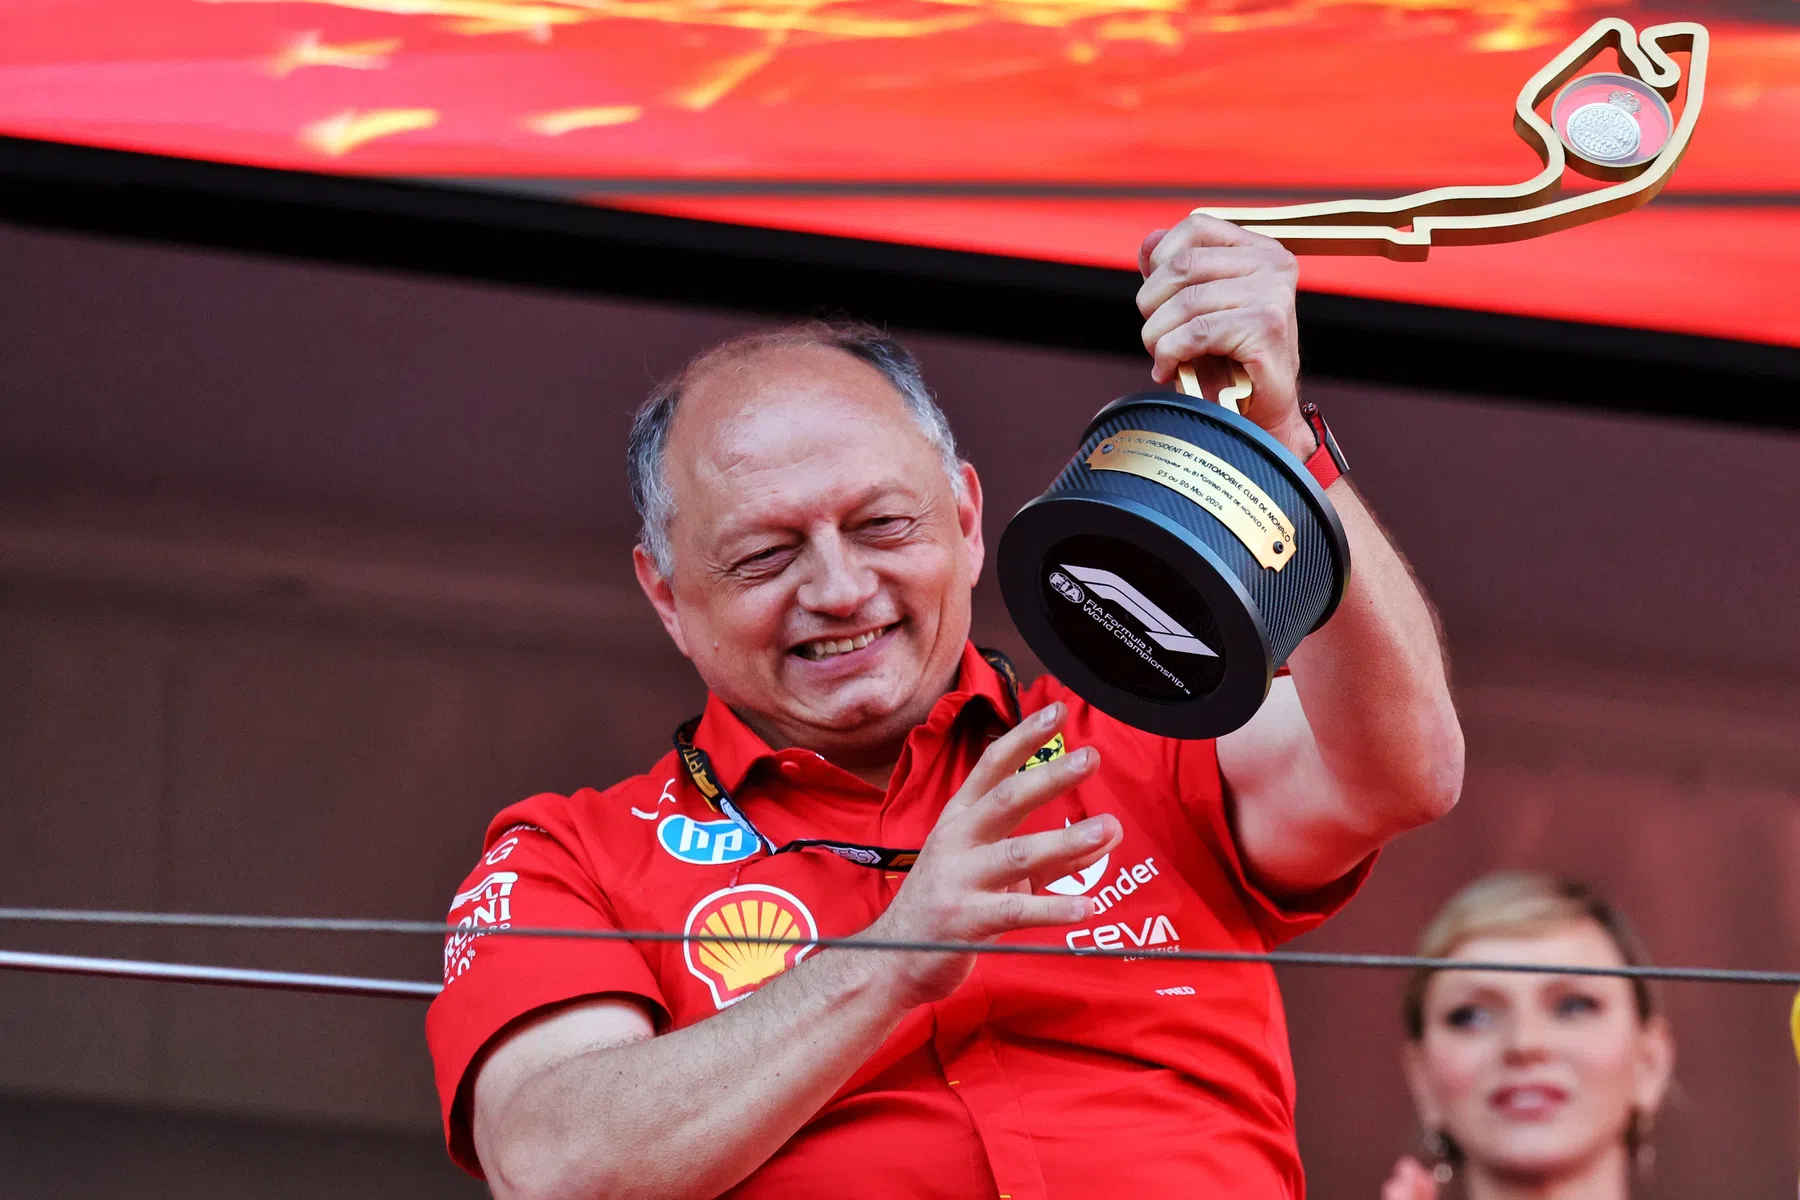 'New front suspension for Ferrari to battle Red Bull'